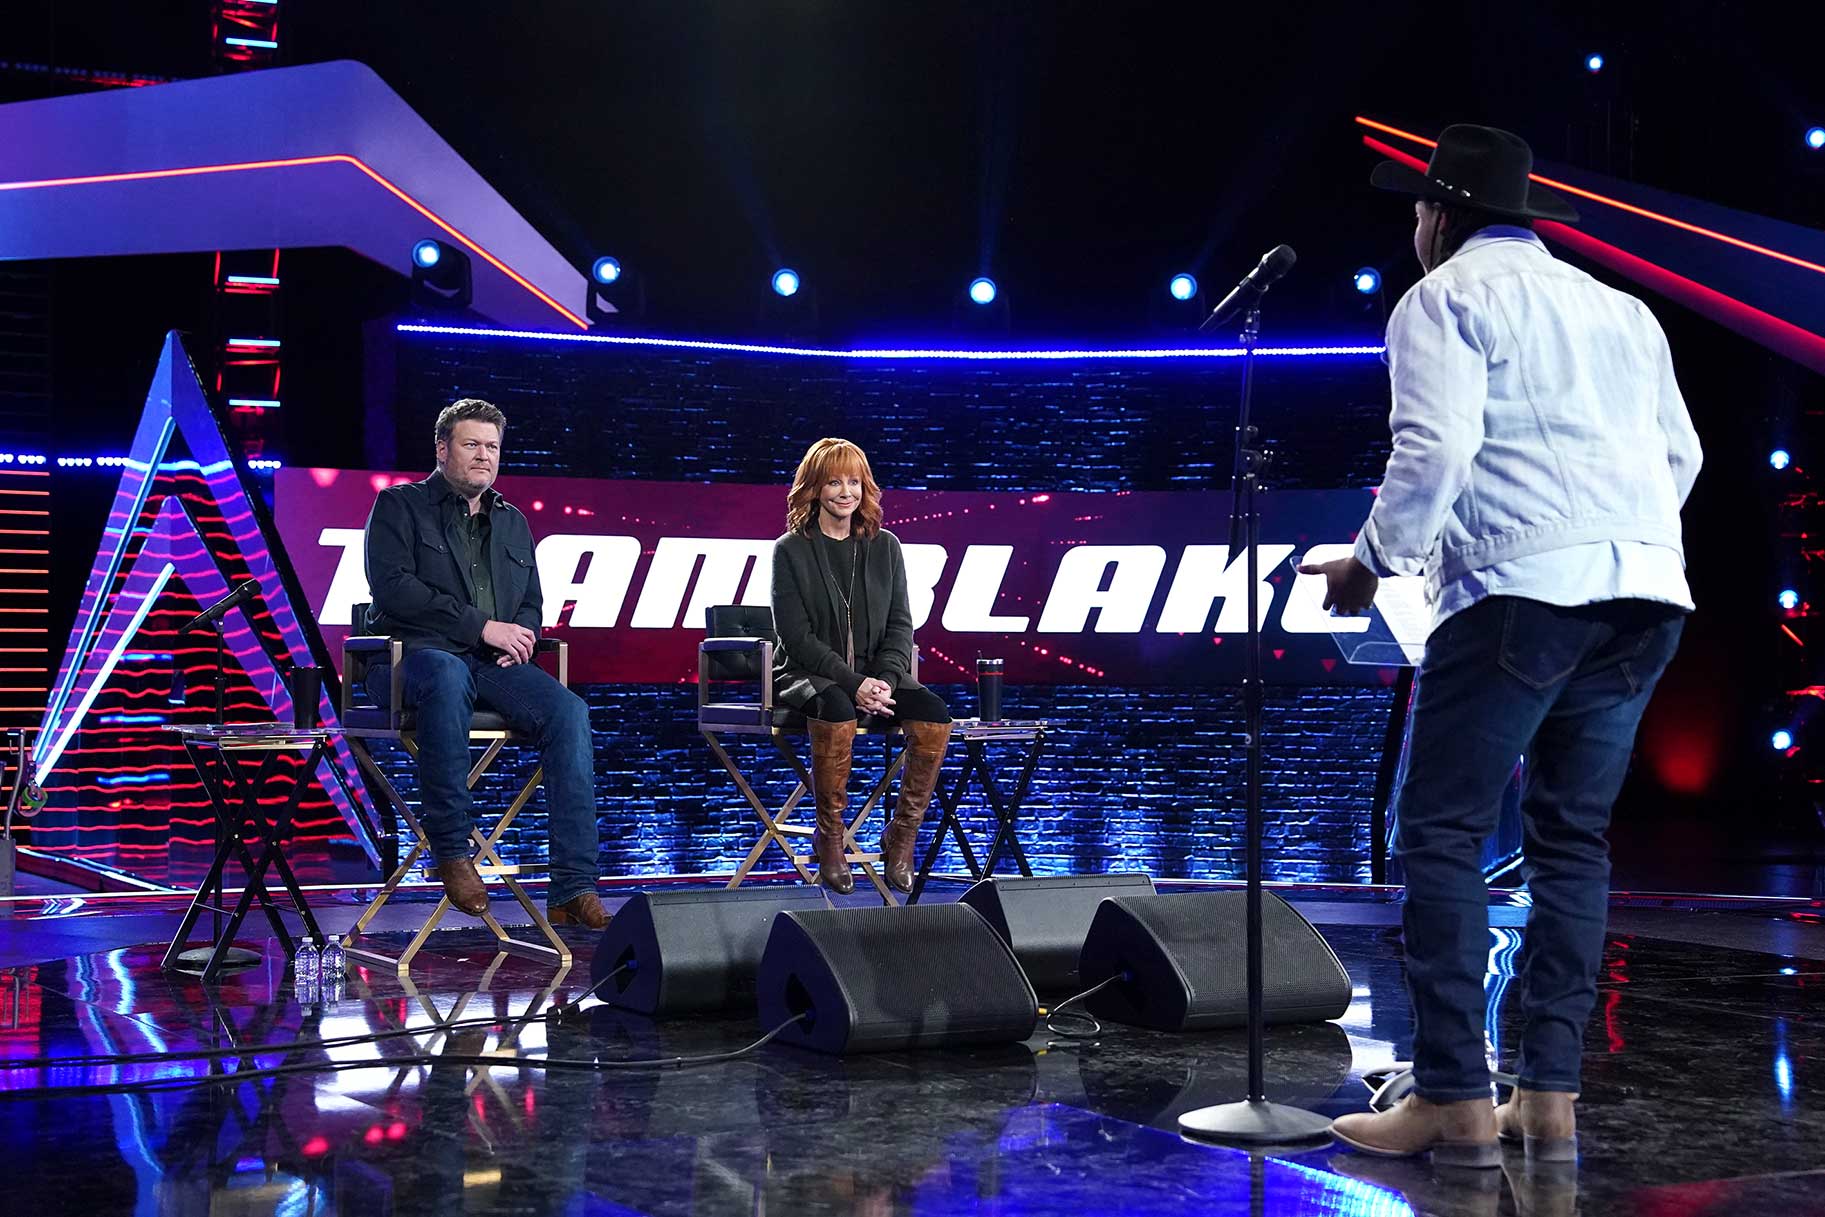 Blake Shelton, Reba McEntire and NOVIAS appear on The Voice.